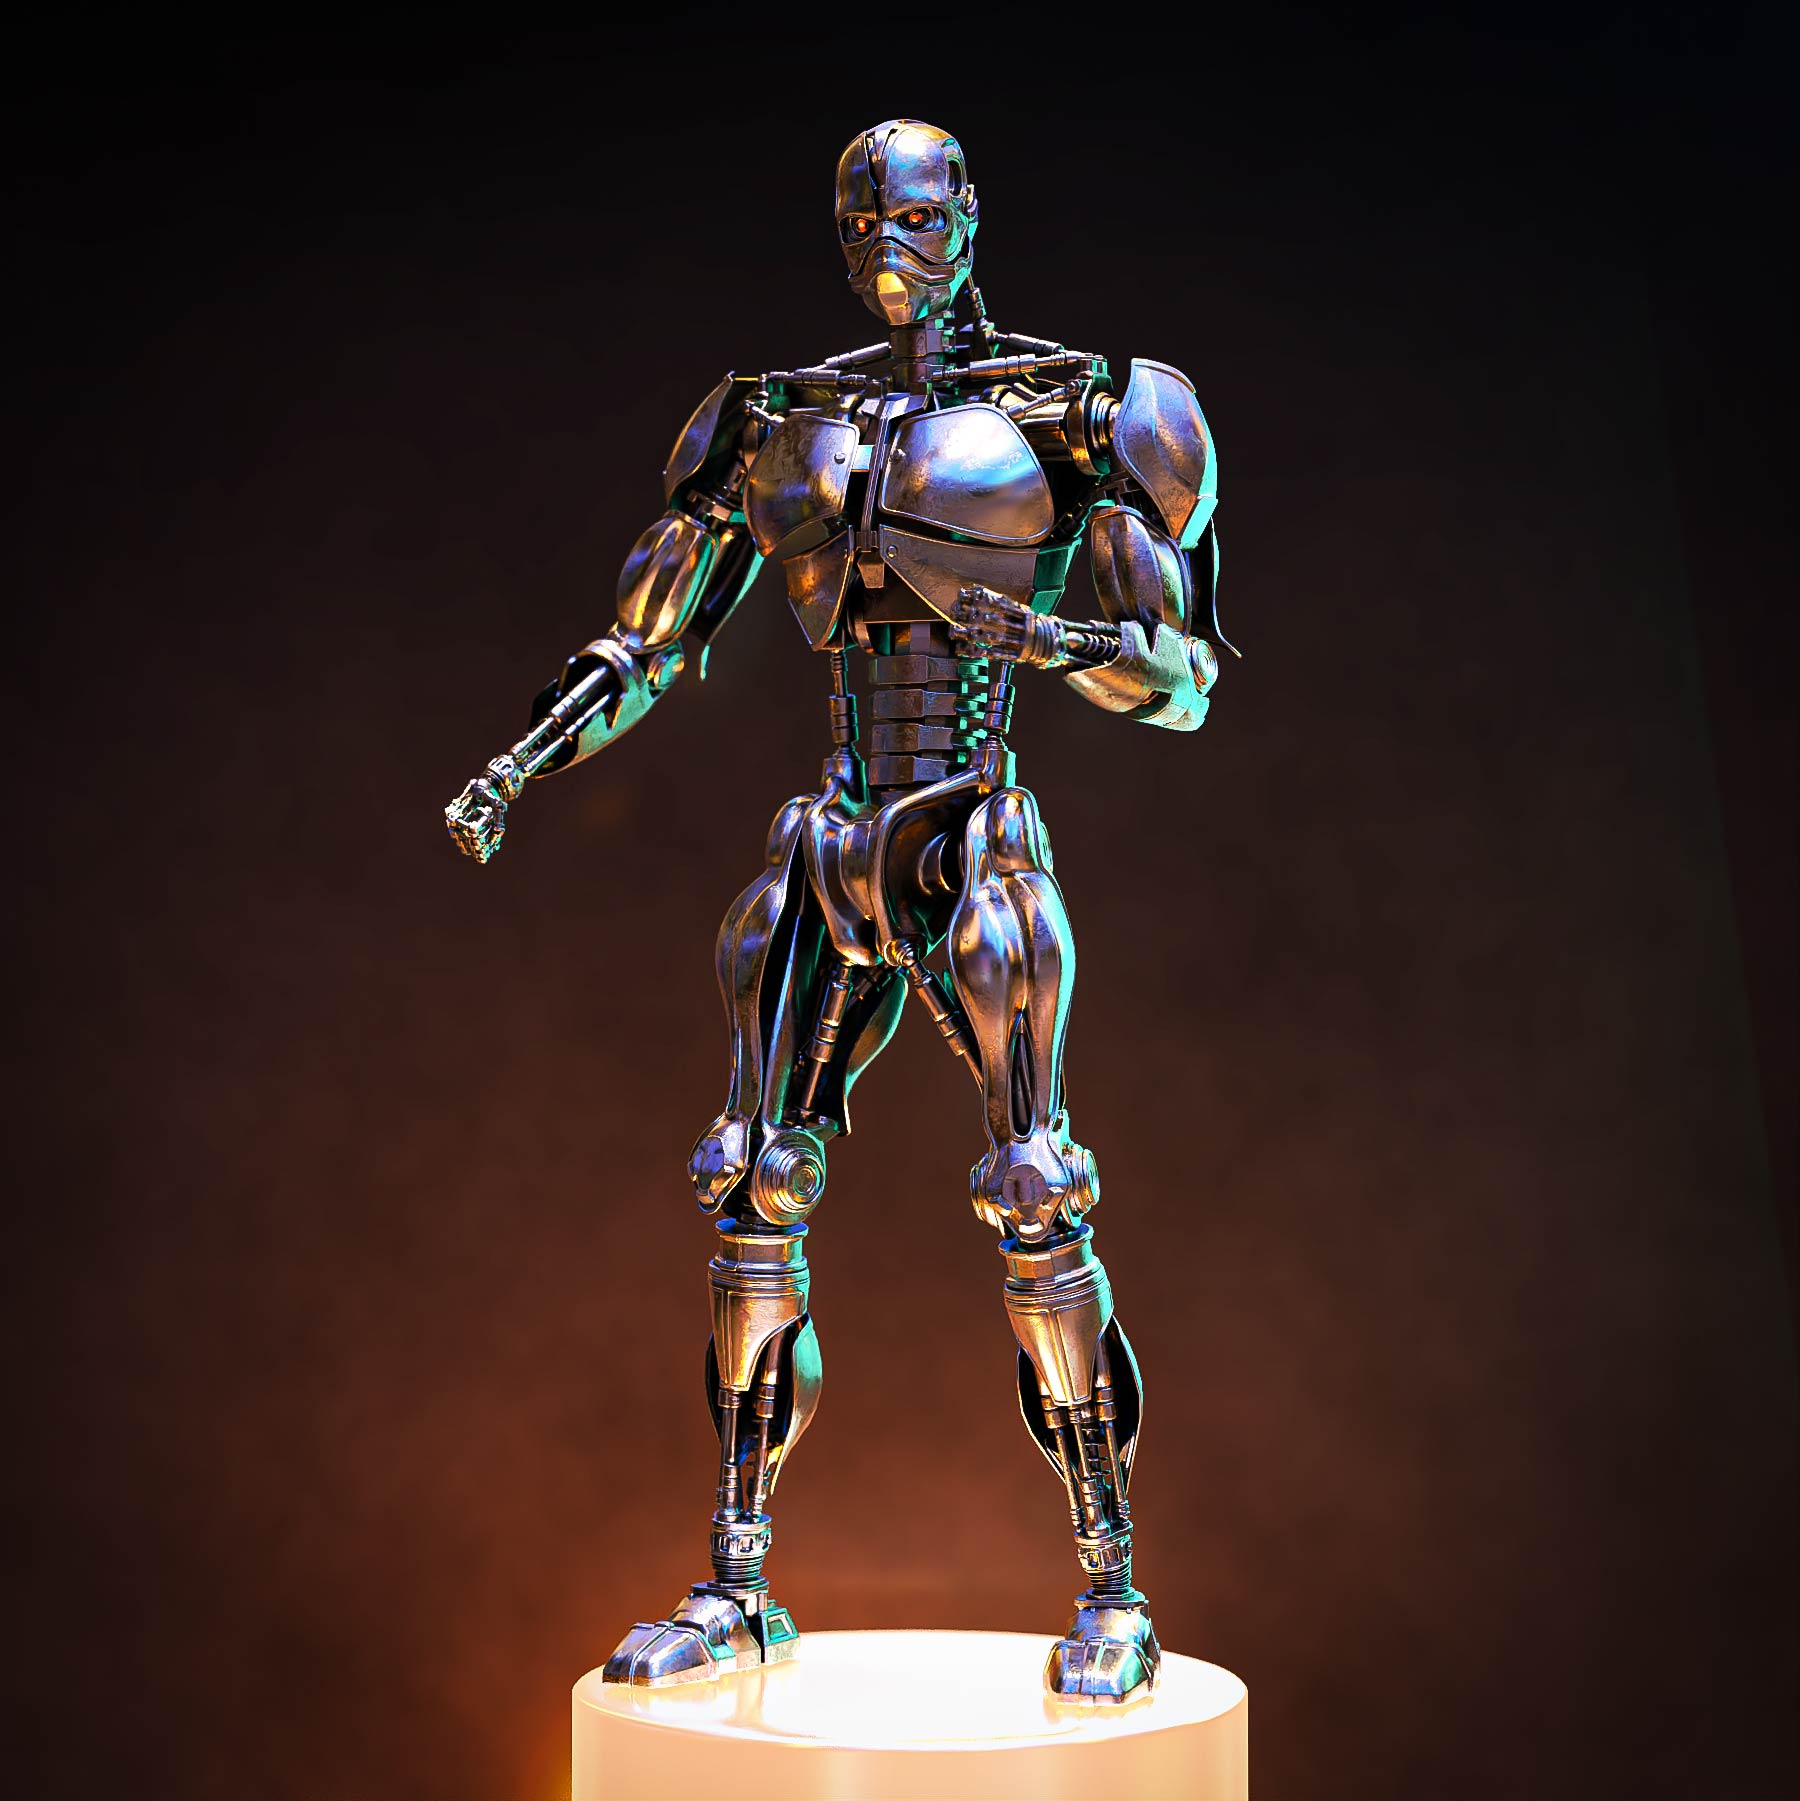 Rigged-Terminator-3D-Model-Futuristic-Cybernetic-Exoskeleton